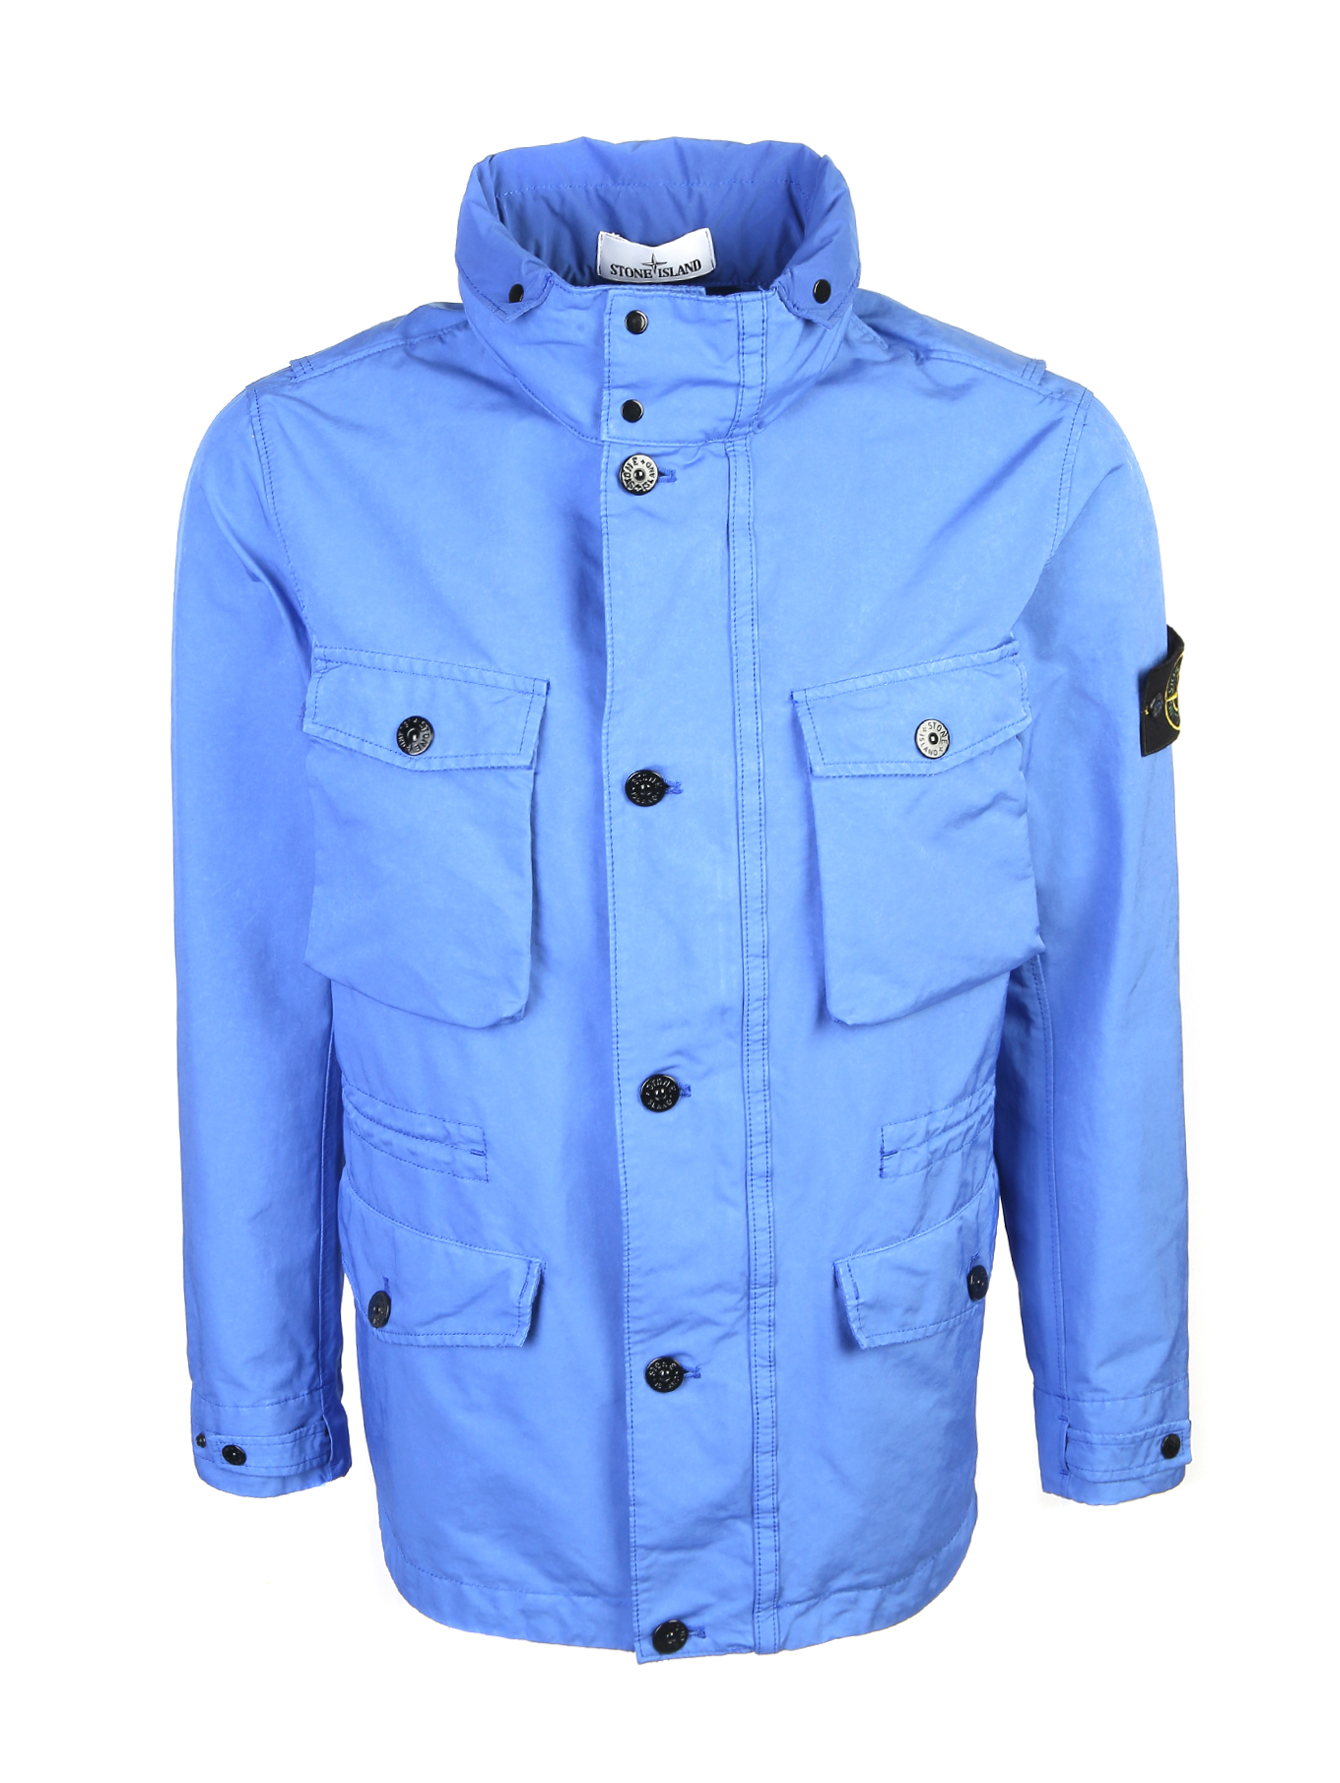 Купить куртку stones. Куртка стон Айленд синяя. Голубая куртка стон Исланд. Куртки Стоун Исланд. Jacket Stone Island голубой.